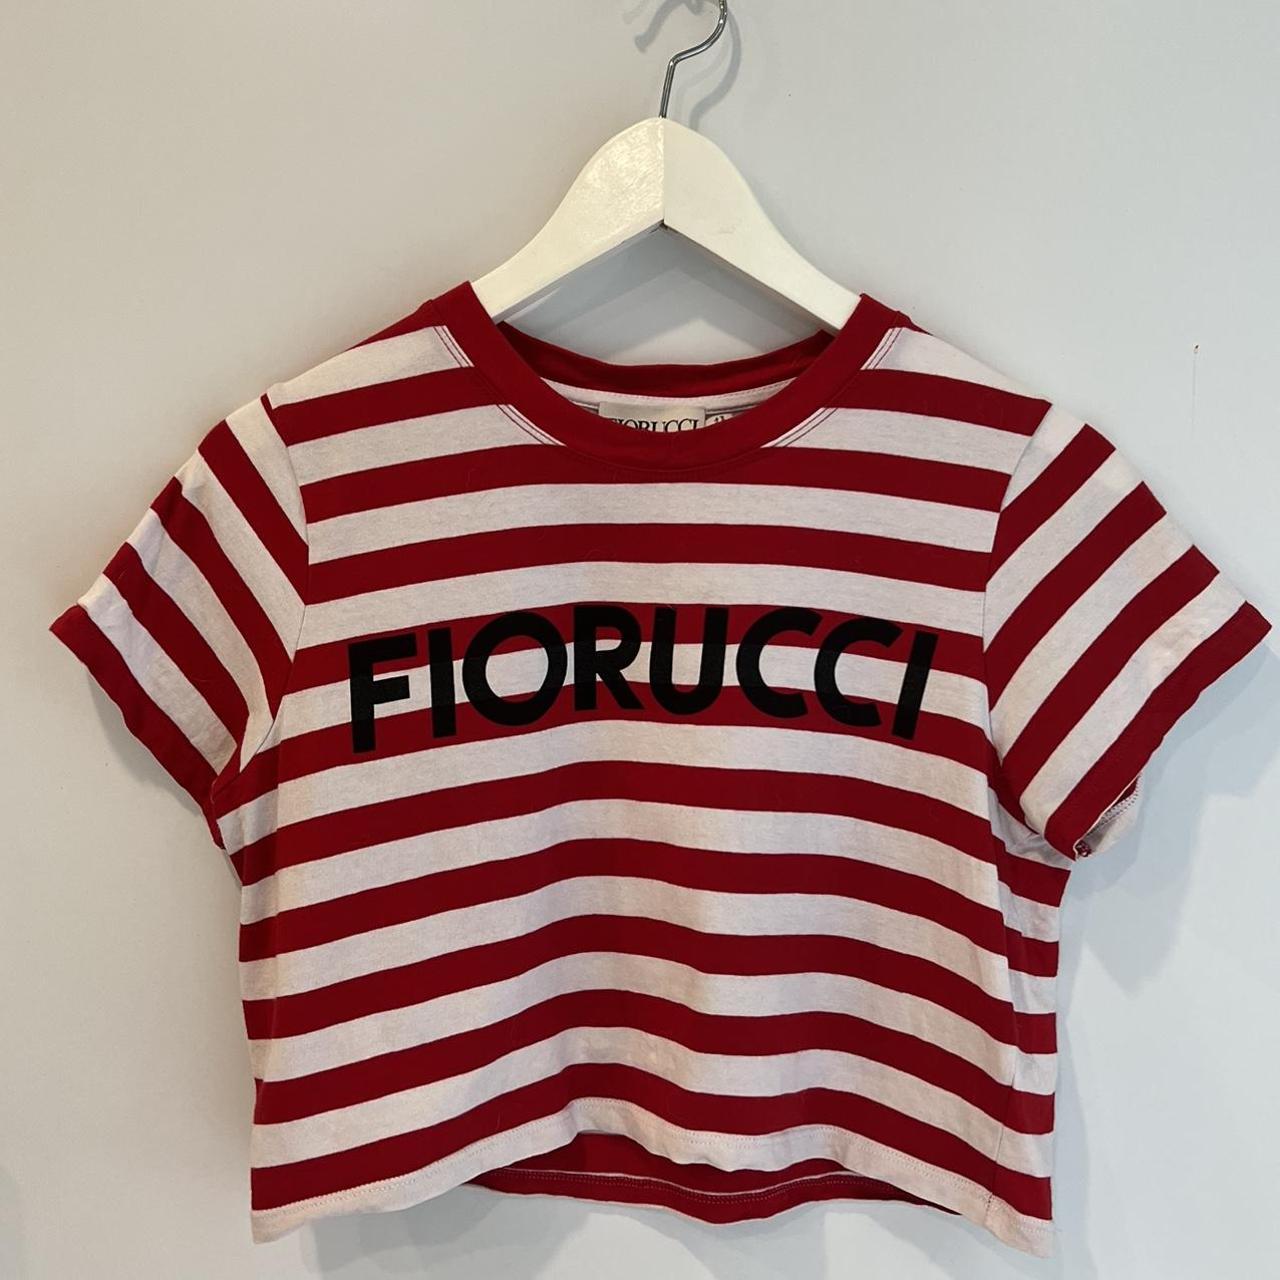 Fiorucci Women's T-shirt